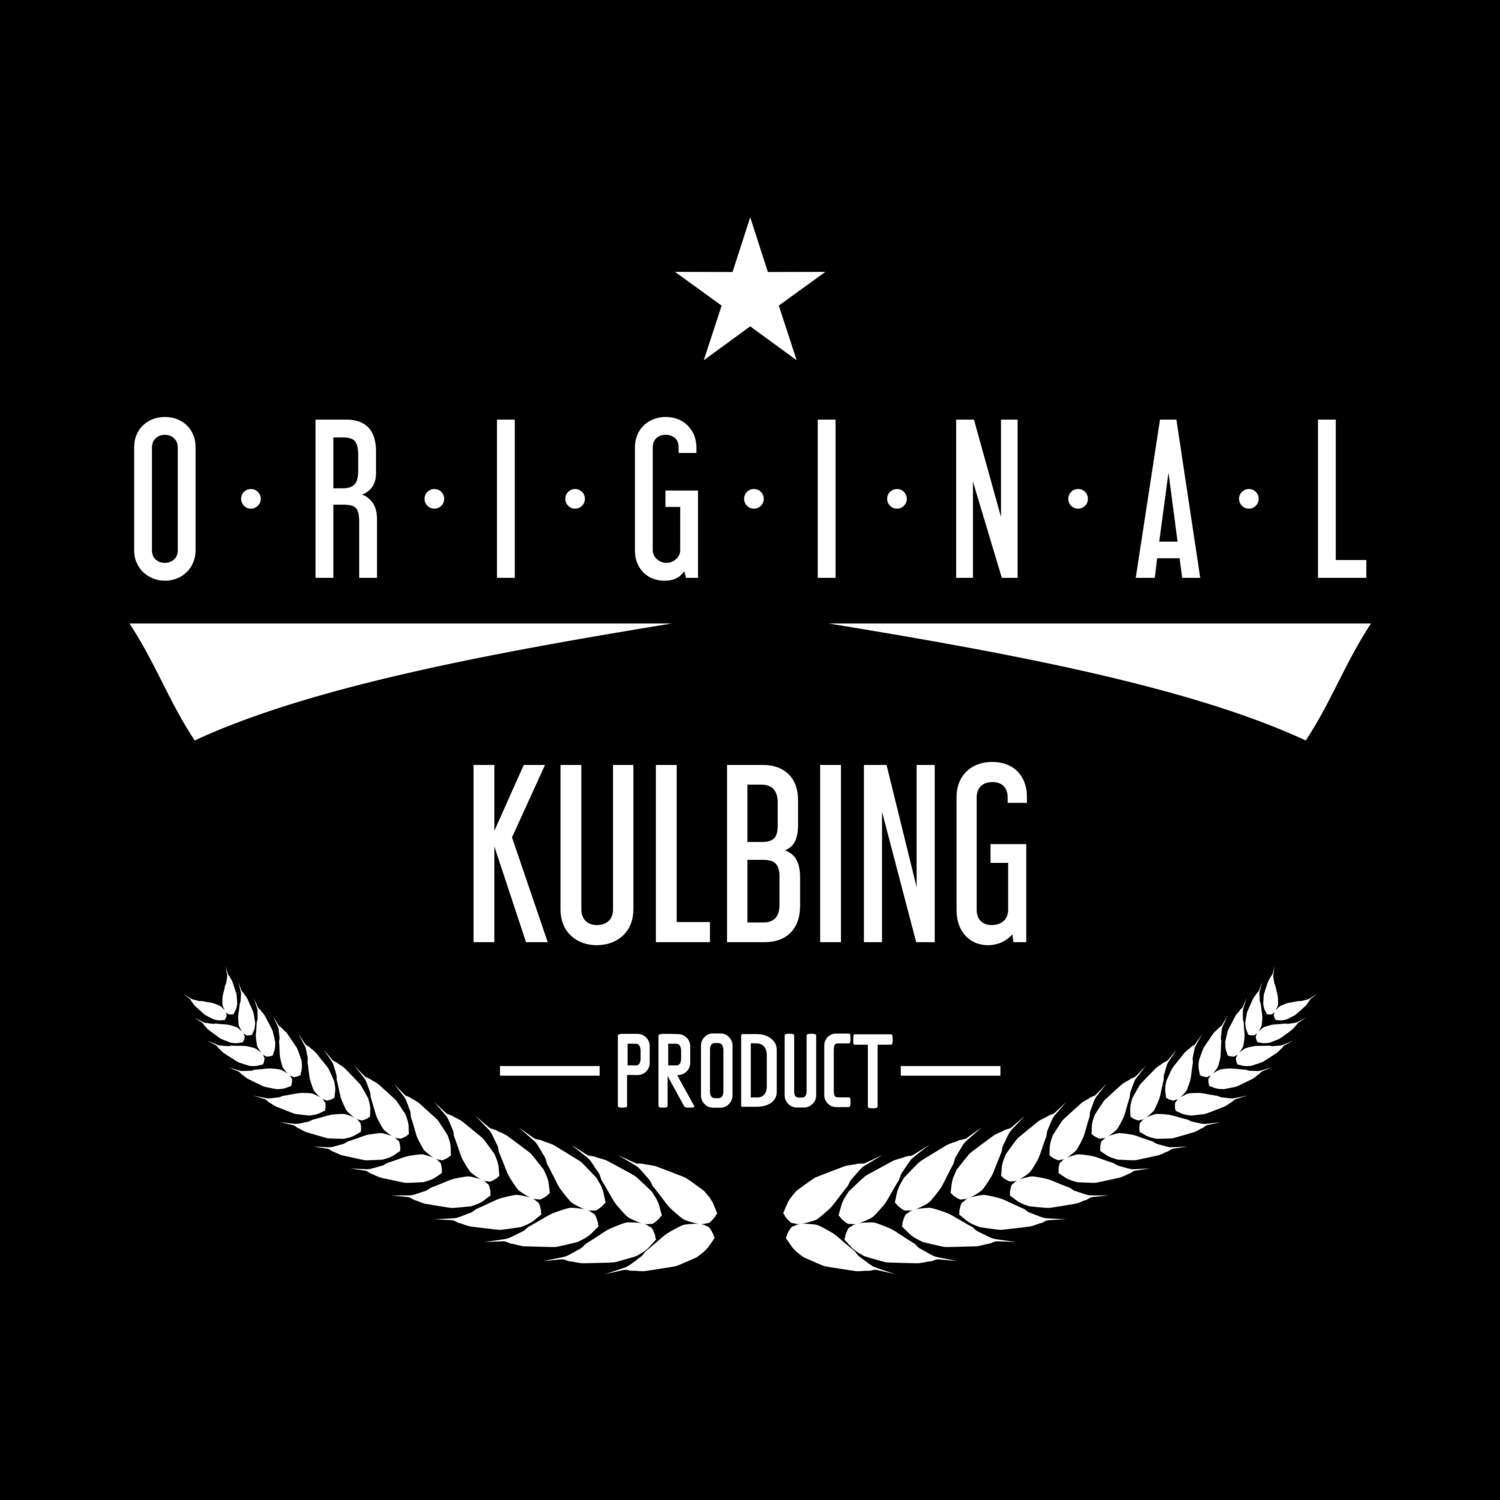 Kulbing T-Shirt »Original Product«